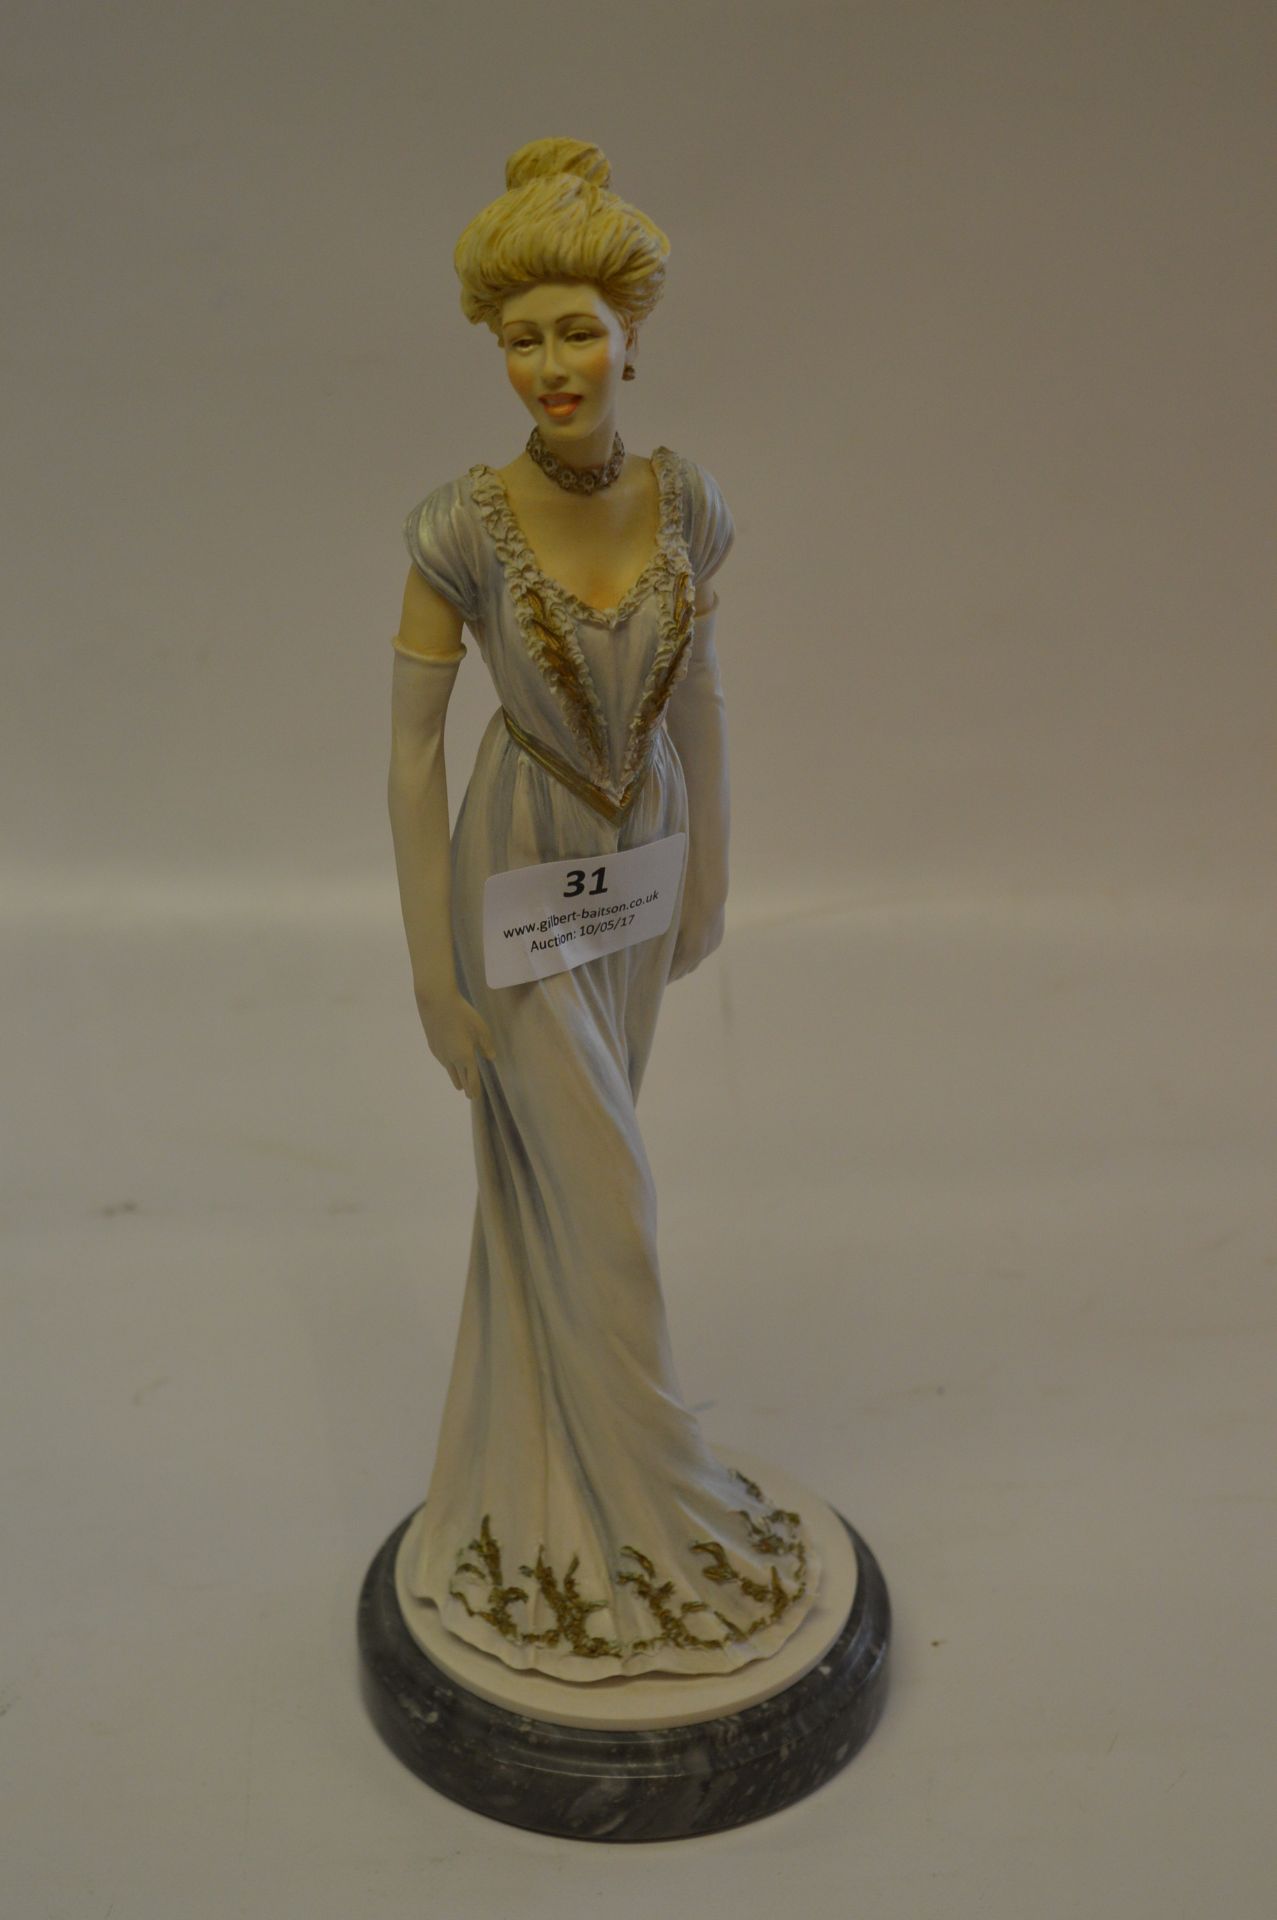 Royal Doulton Figurine "Celebration"